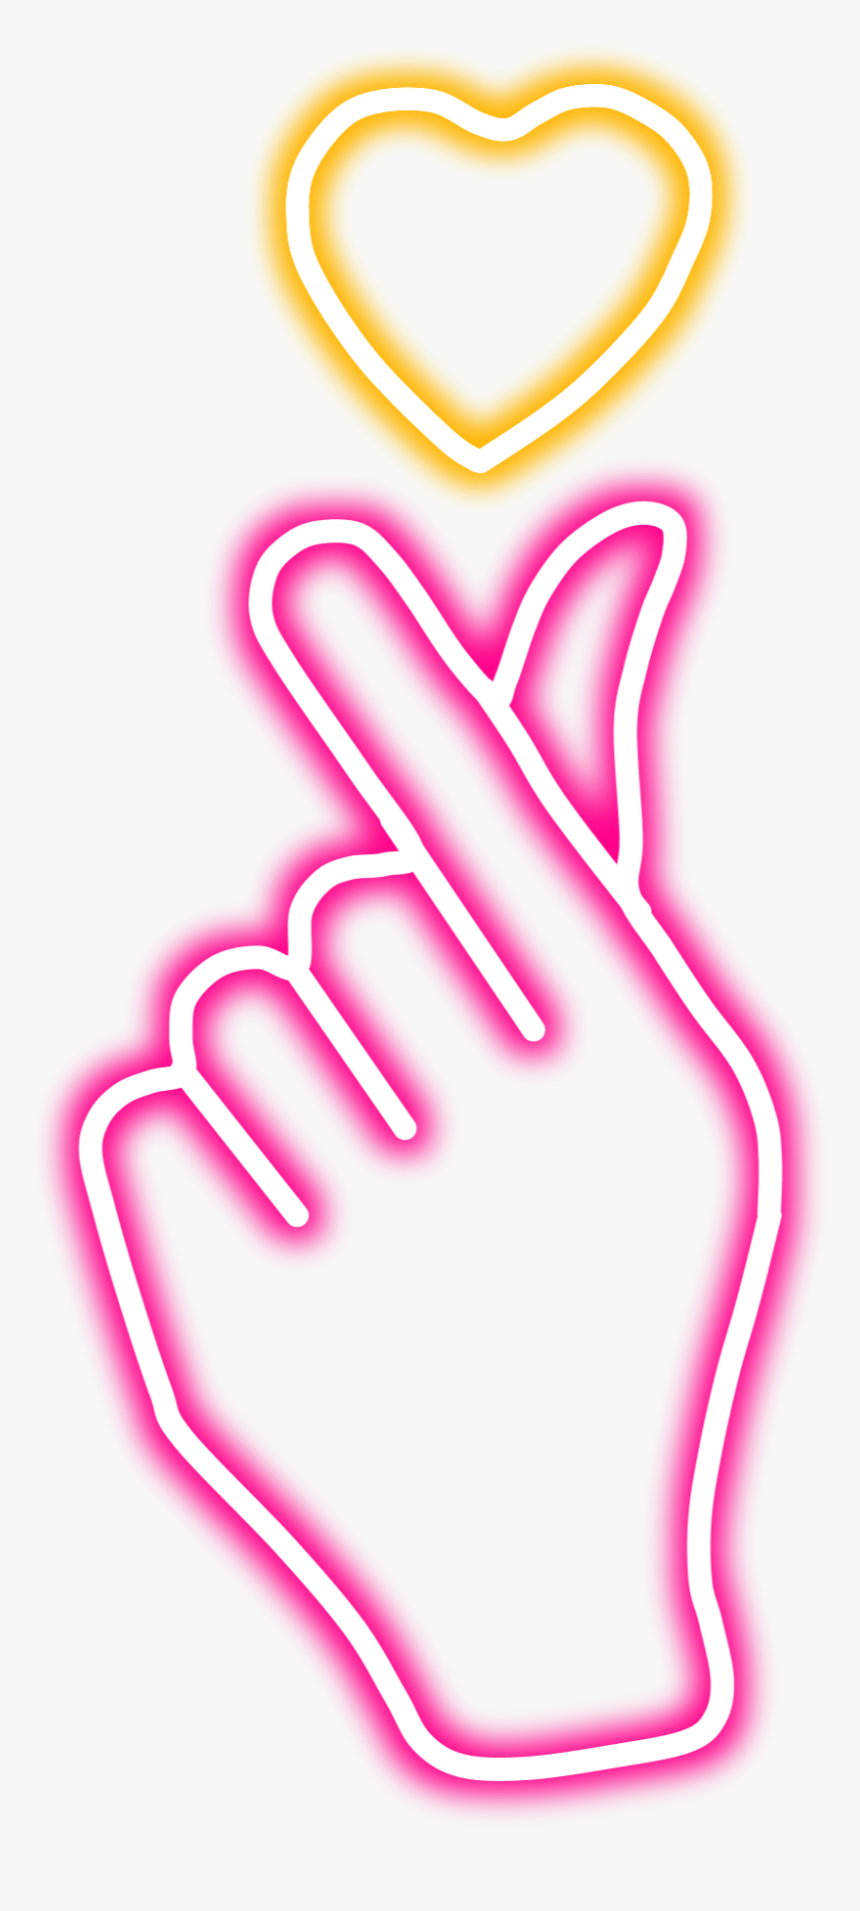 #neon #glow #kpop #heart #pink #